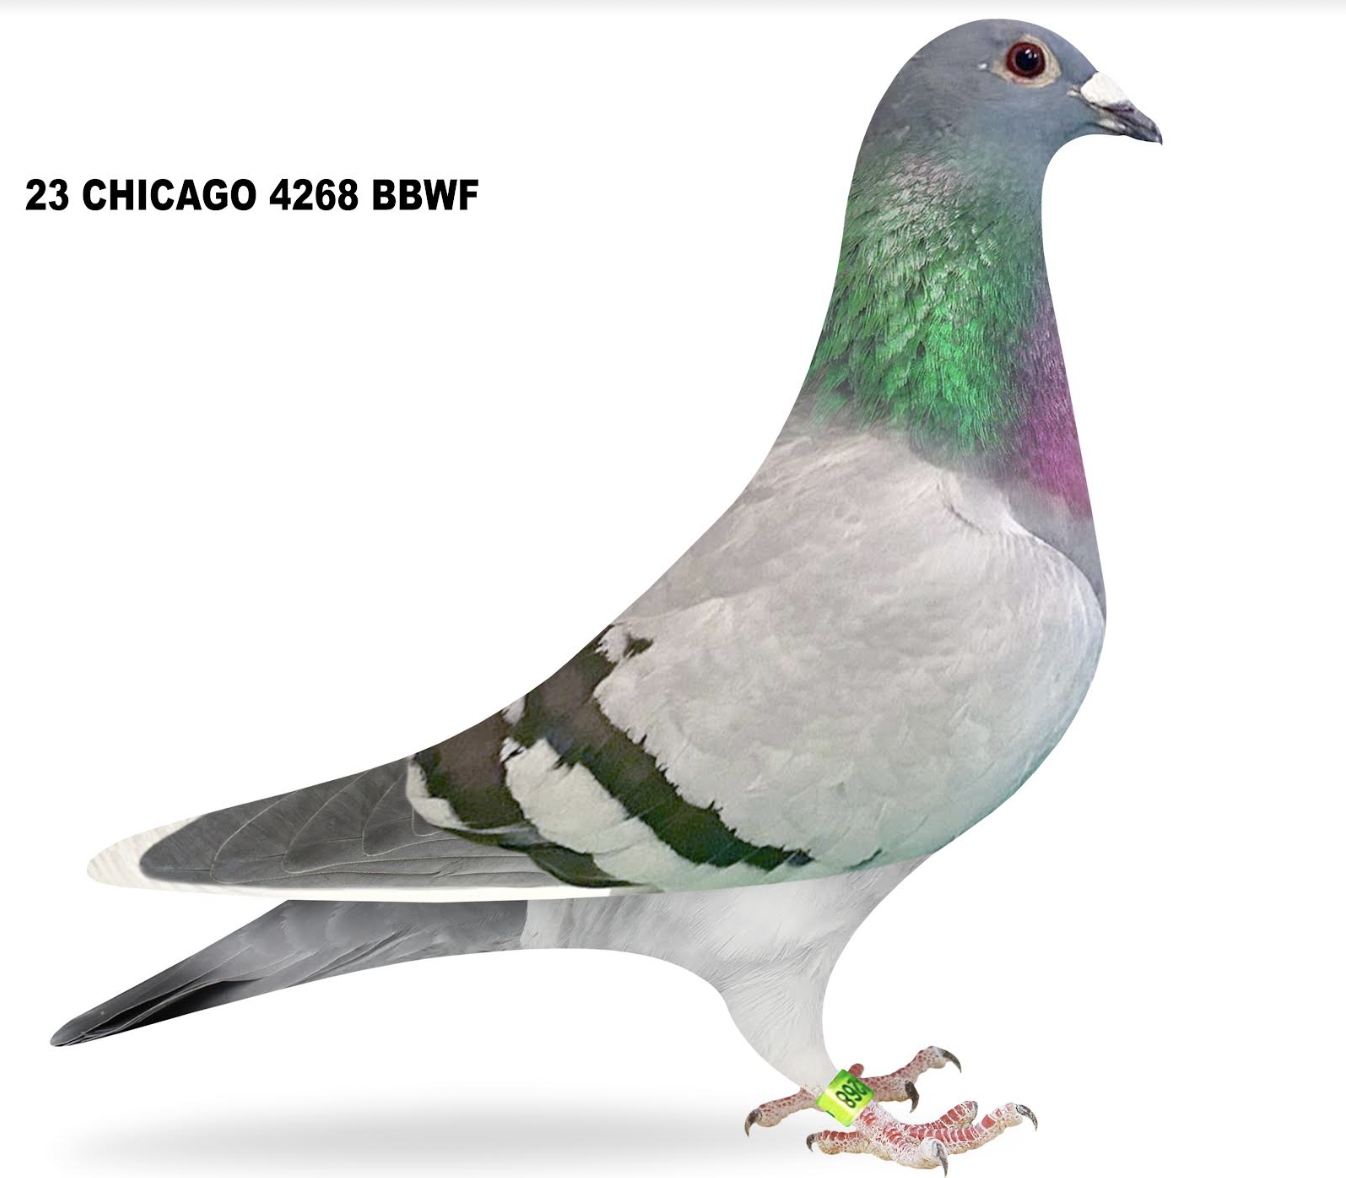 CHICAGO 4268 - Pedigree to Come